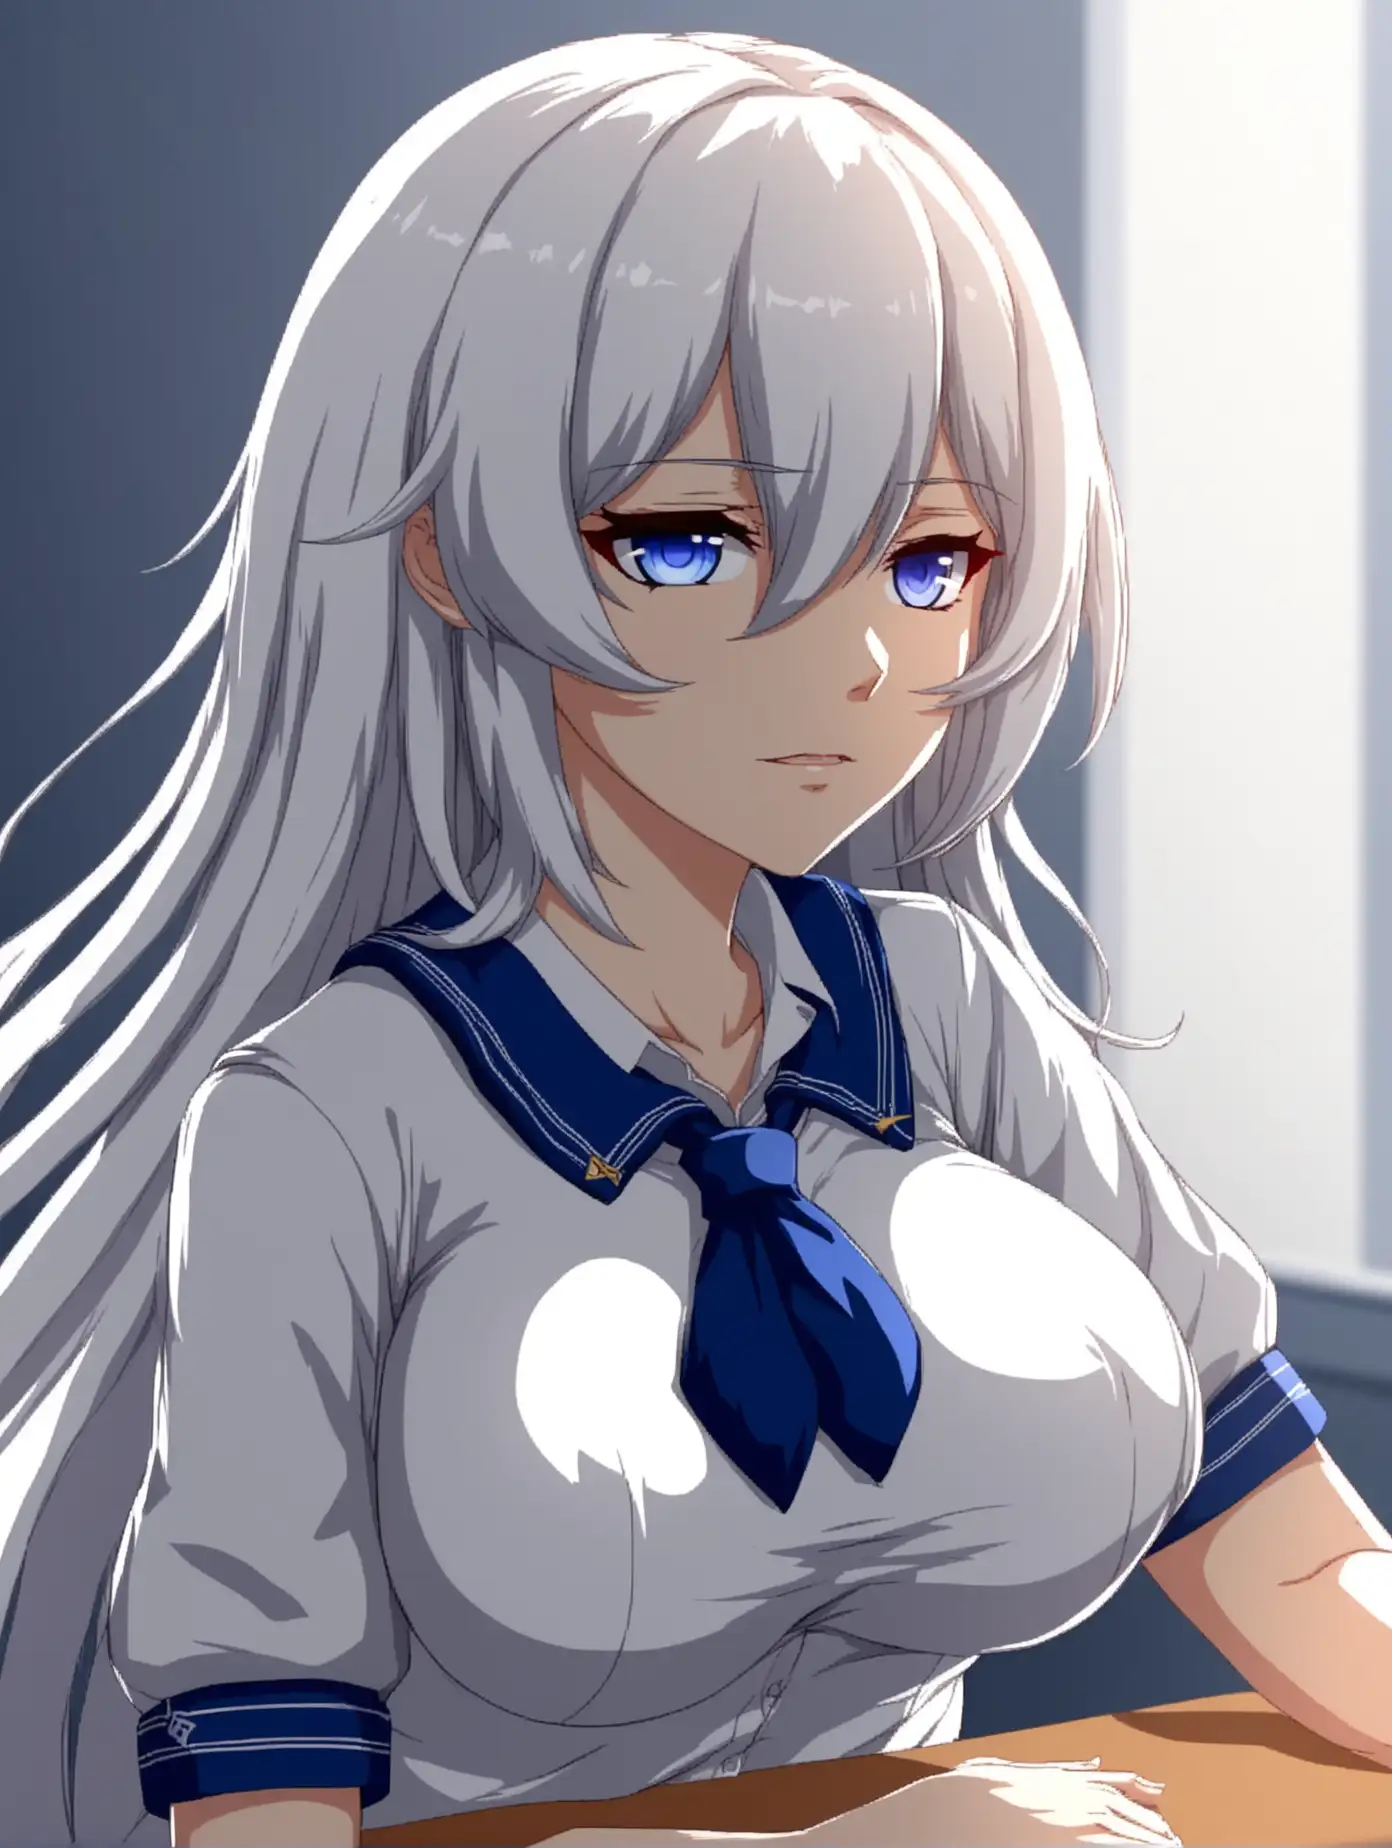 Seductive-Anime-Girl-with-White-Hair-in-Honkai-Impact-Style-School-Uniform